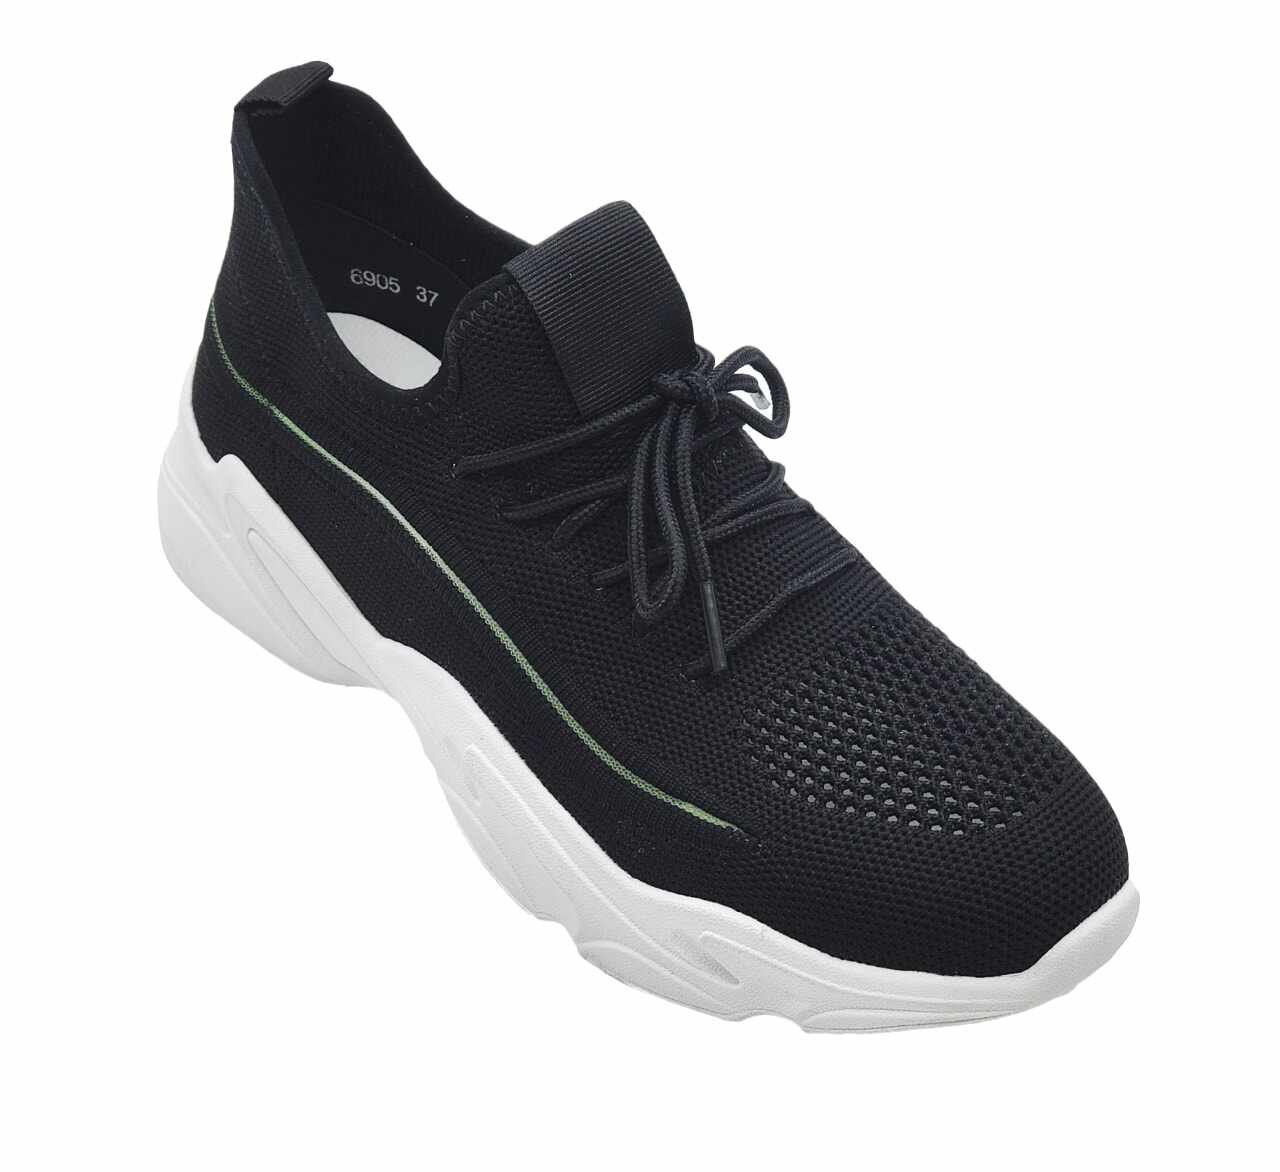 Pantofi sport dama, marca Feeling, culoare negru, din material textil, cod 6905-YLW